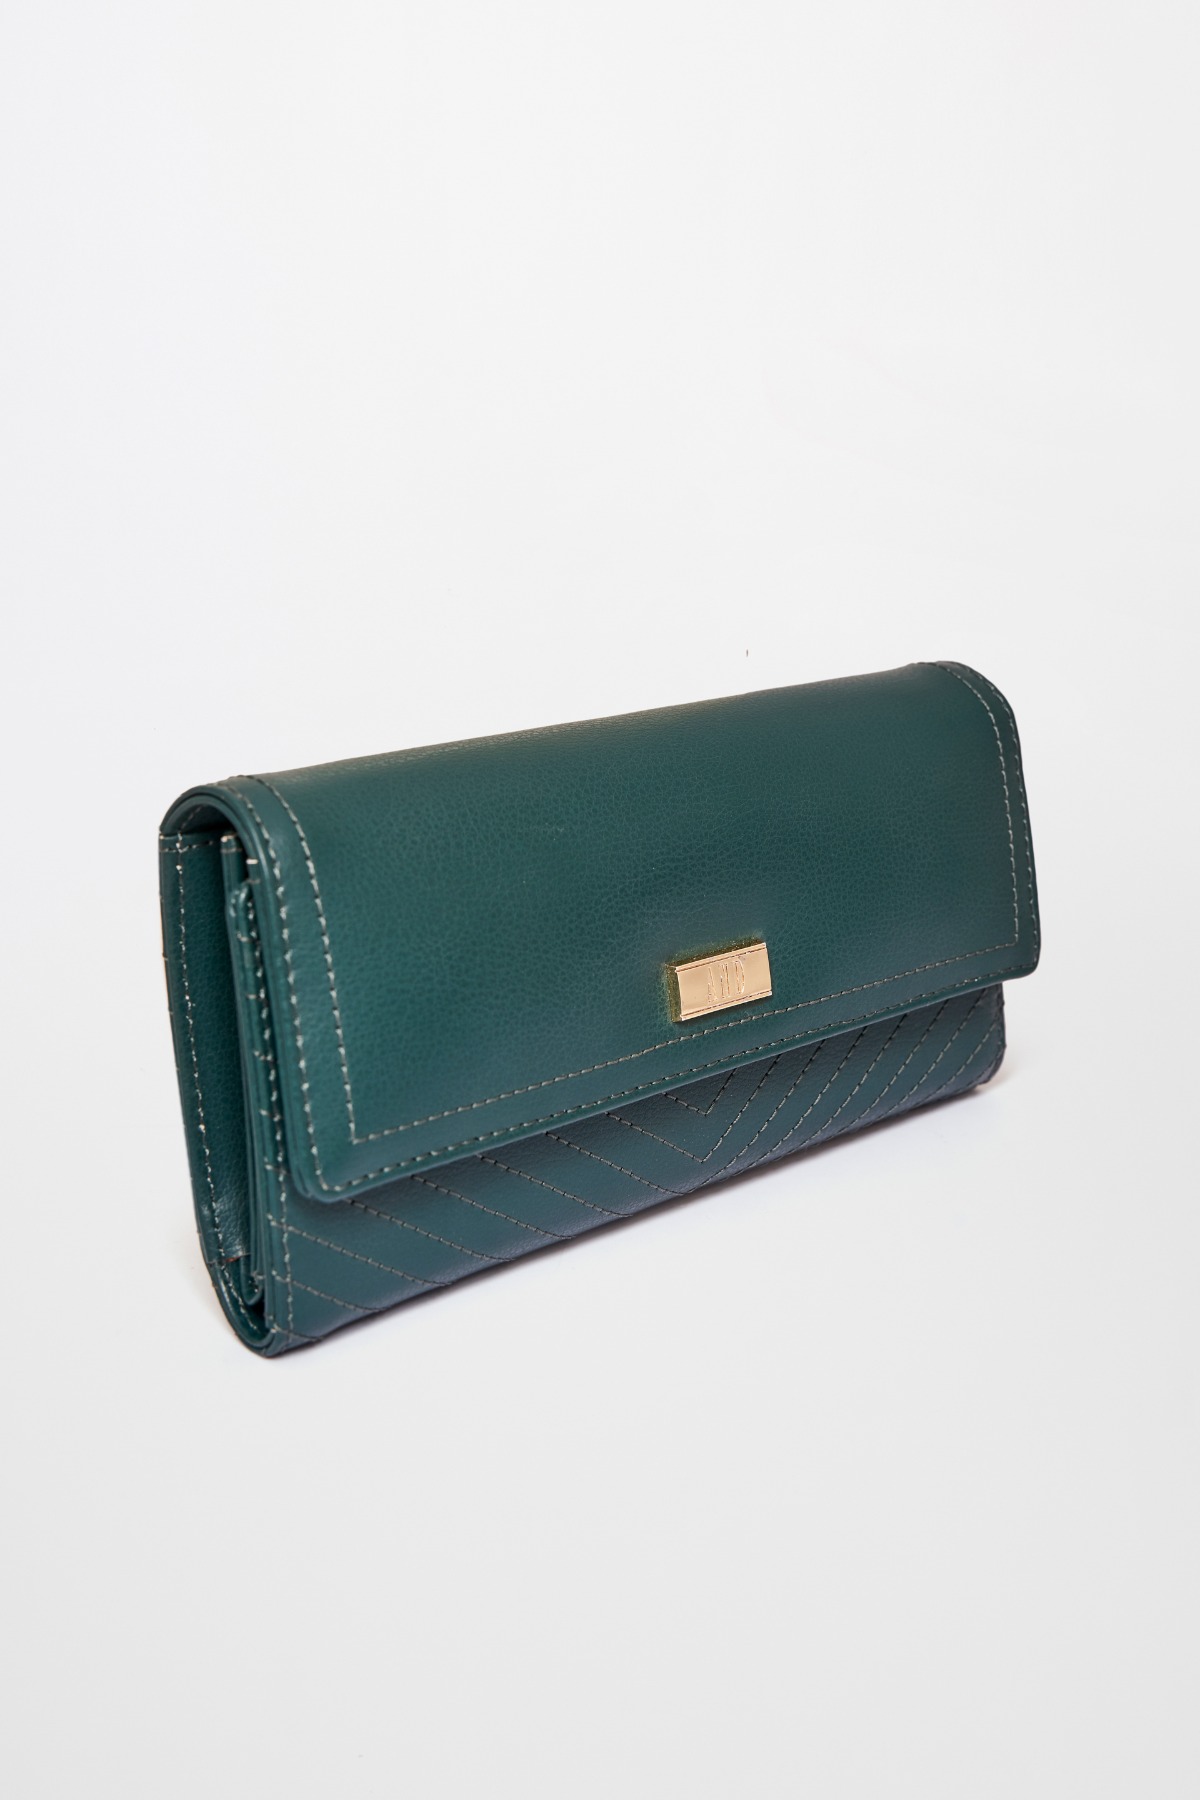 1 - Green Handbag, image 2